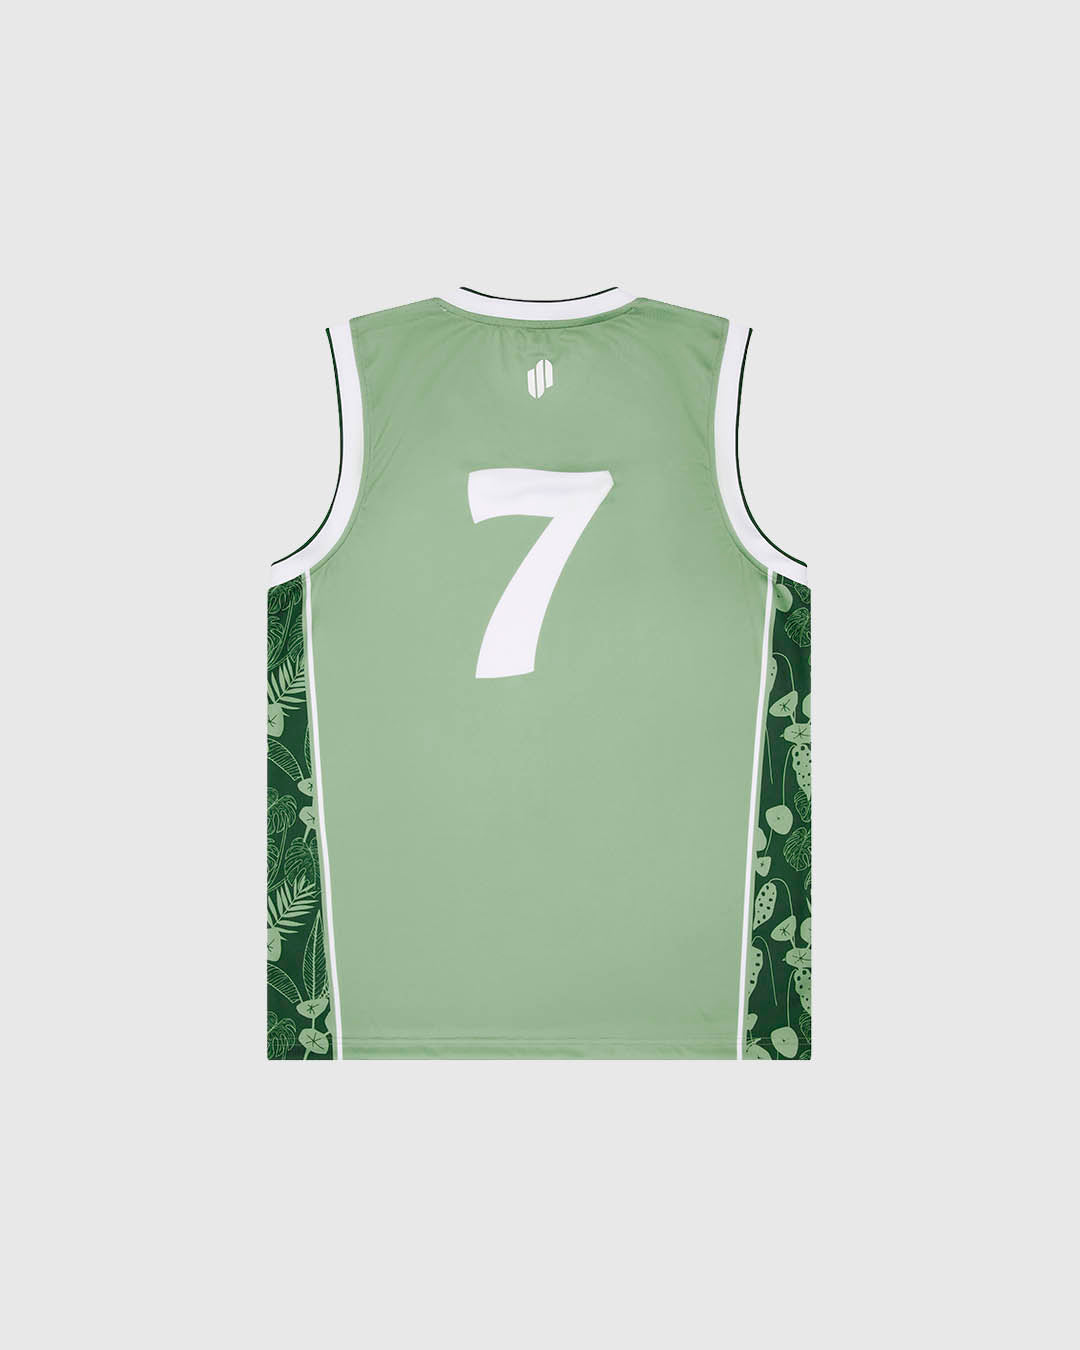 ED7:RF 1 - Womens Rainforest Basketball Vest - Green Print